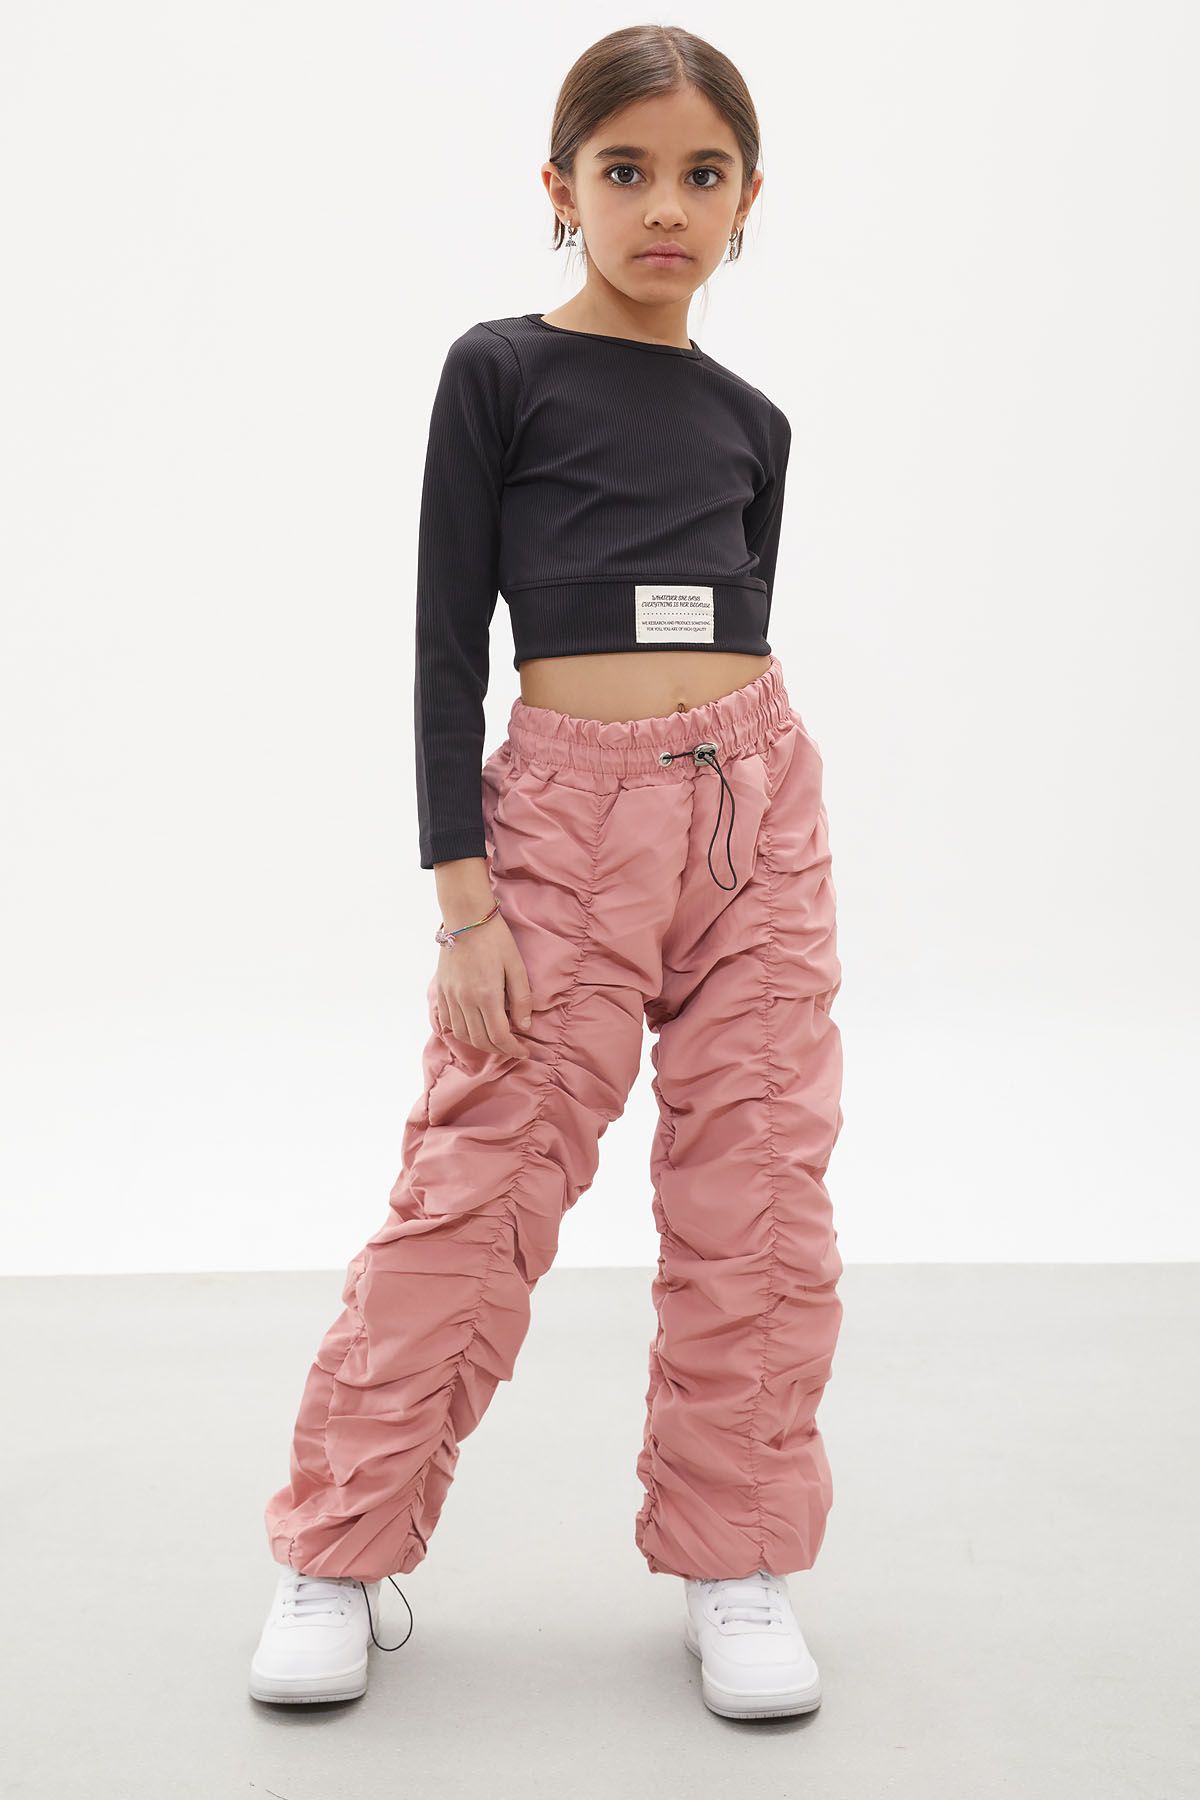 Cansın Mini Pembe Şerit Dikişli Kız Paraşüt Pantolon 18004